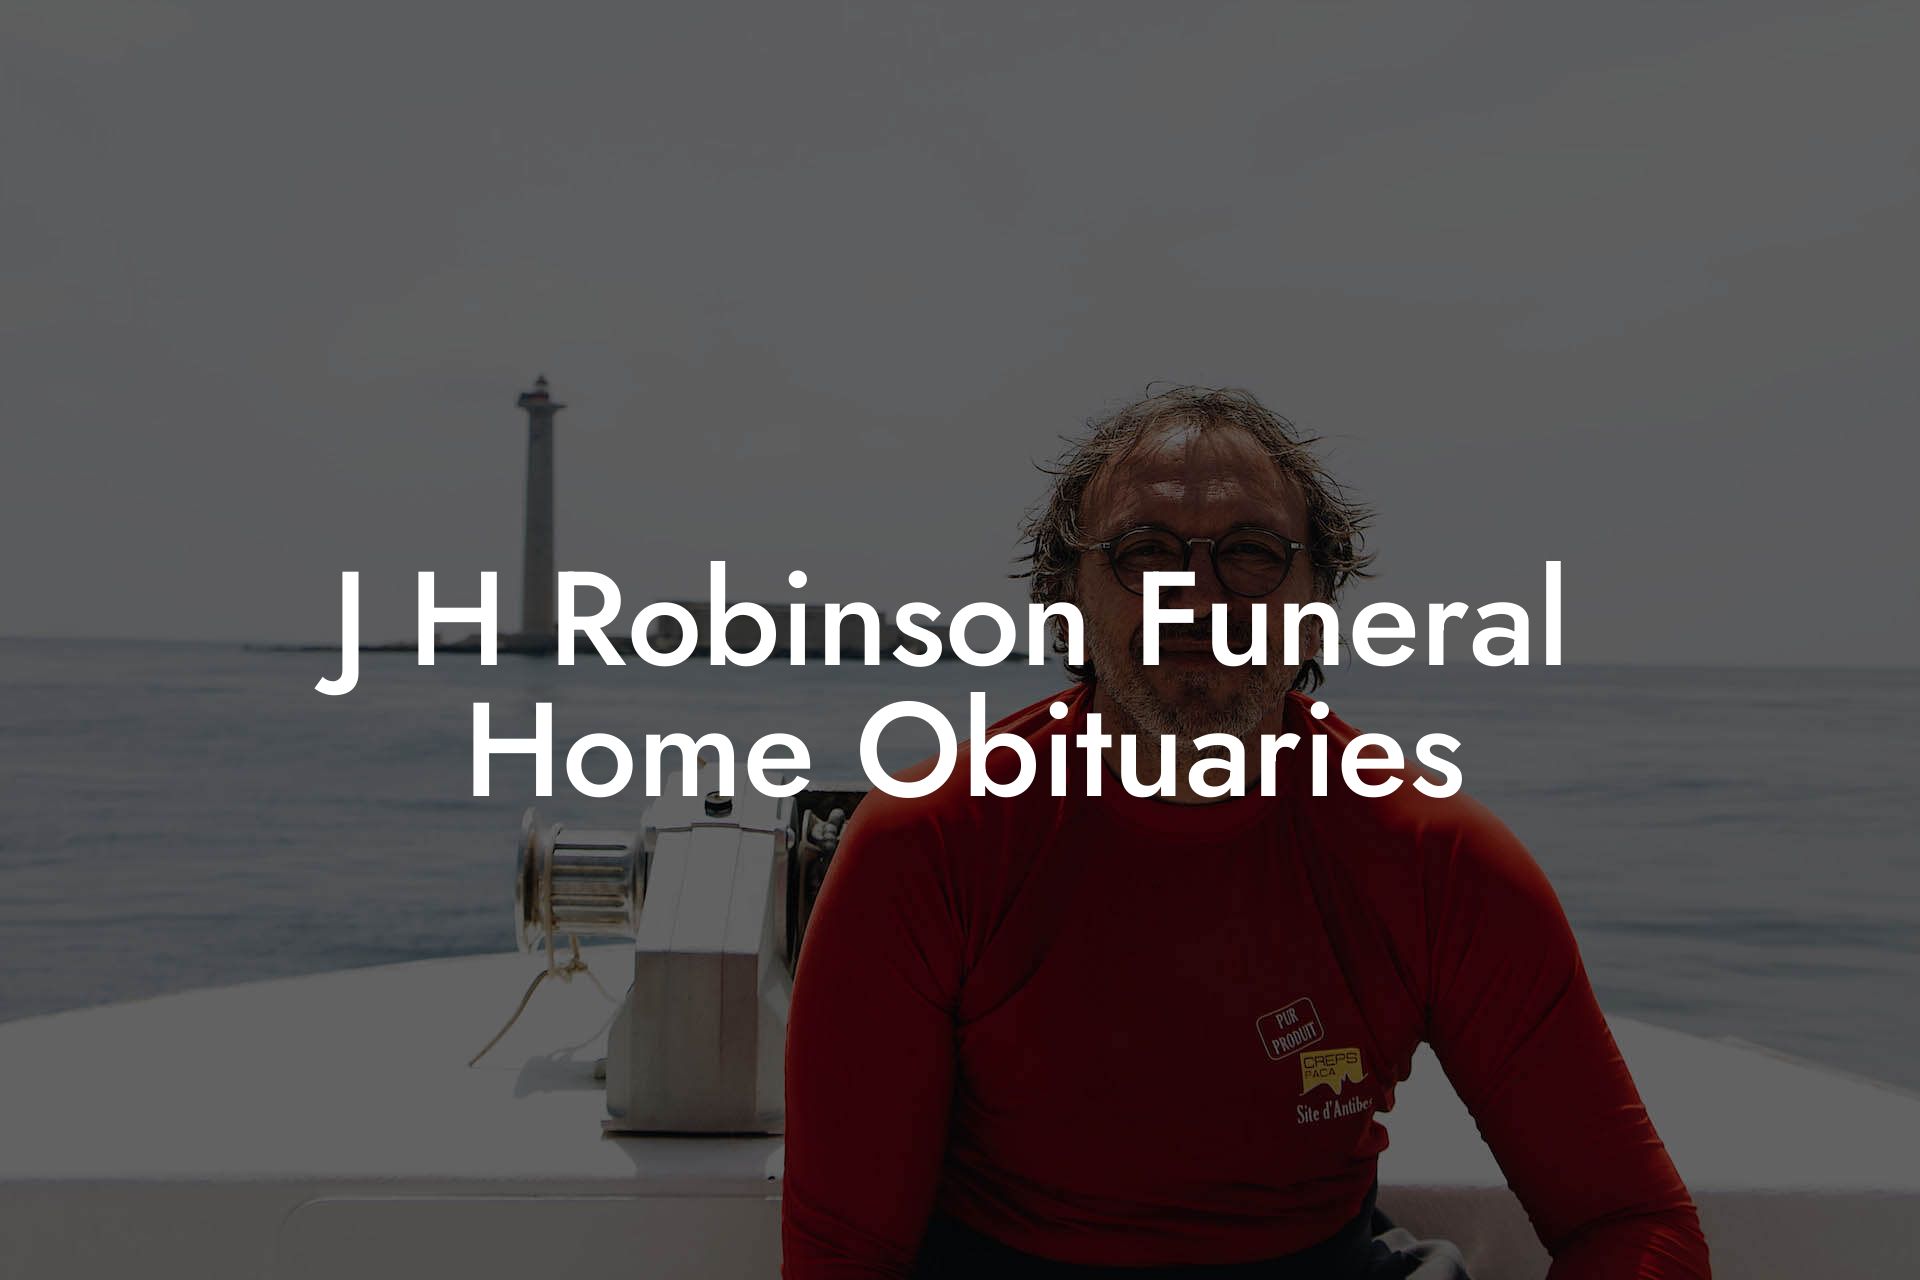 J H Robinson Funeral Home Obituaries